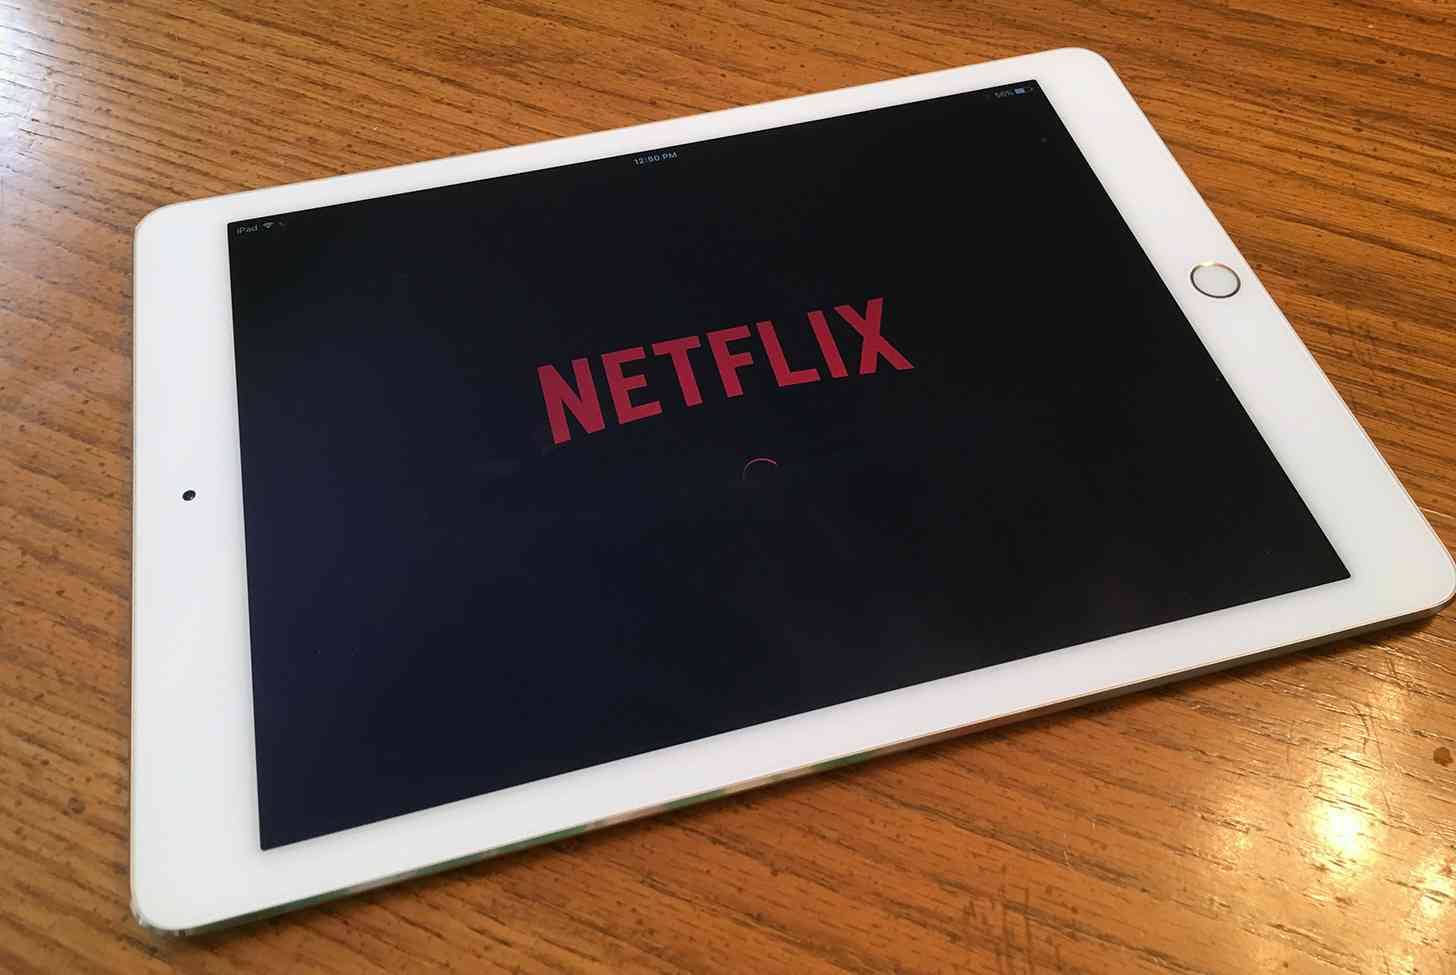 Netflix iPad app